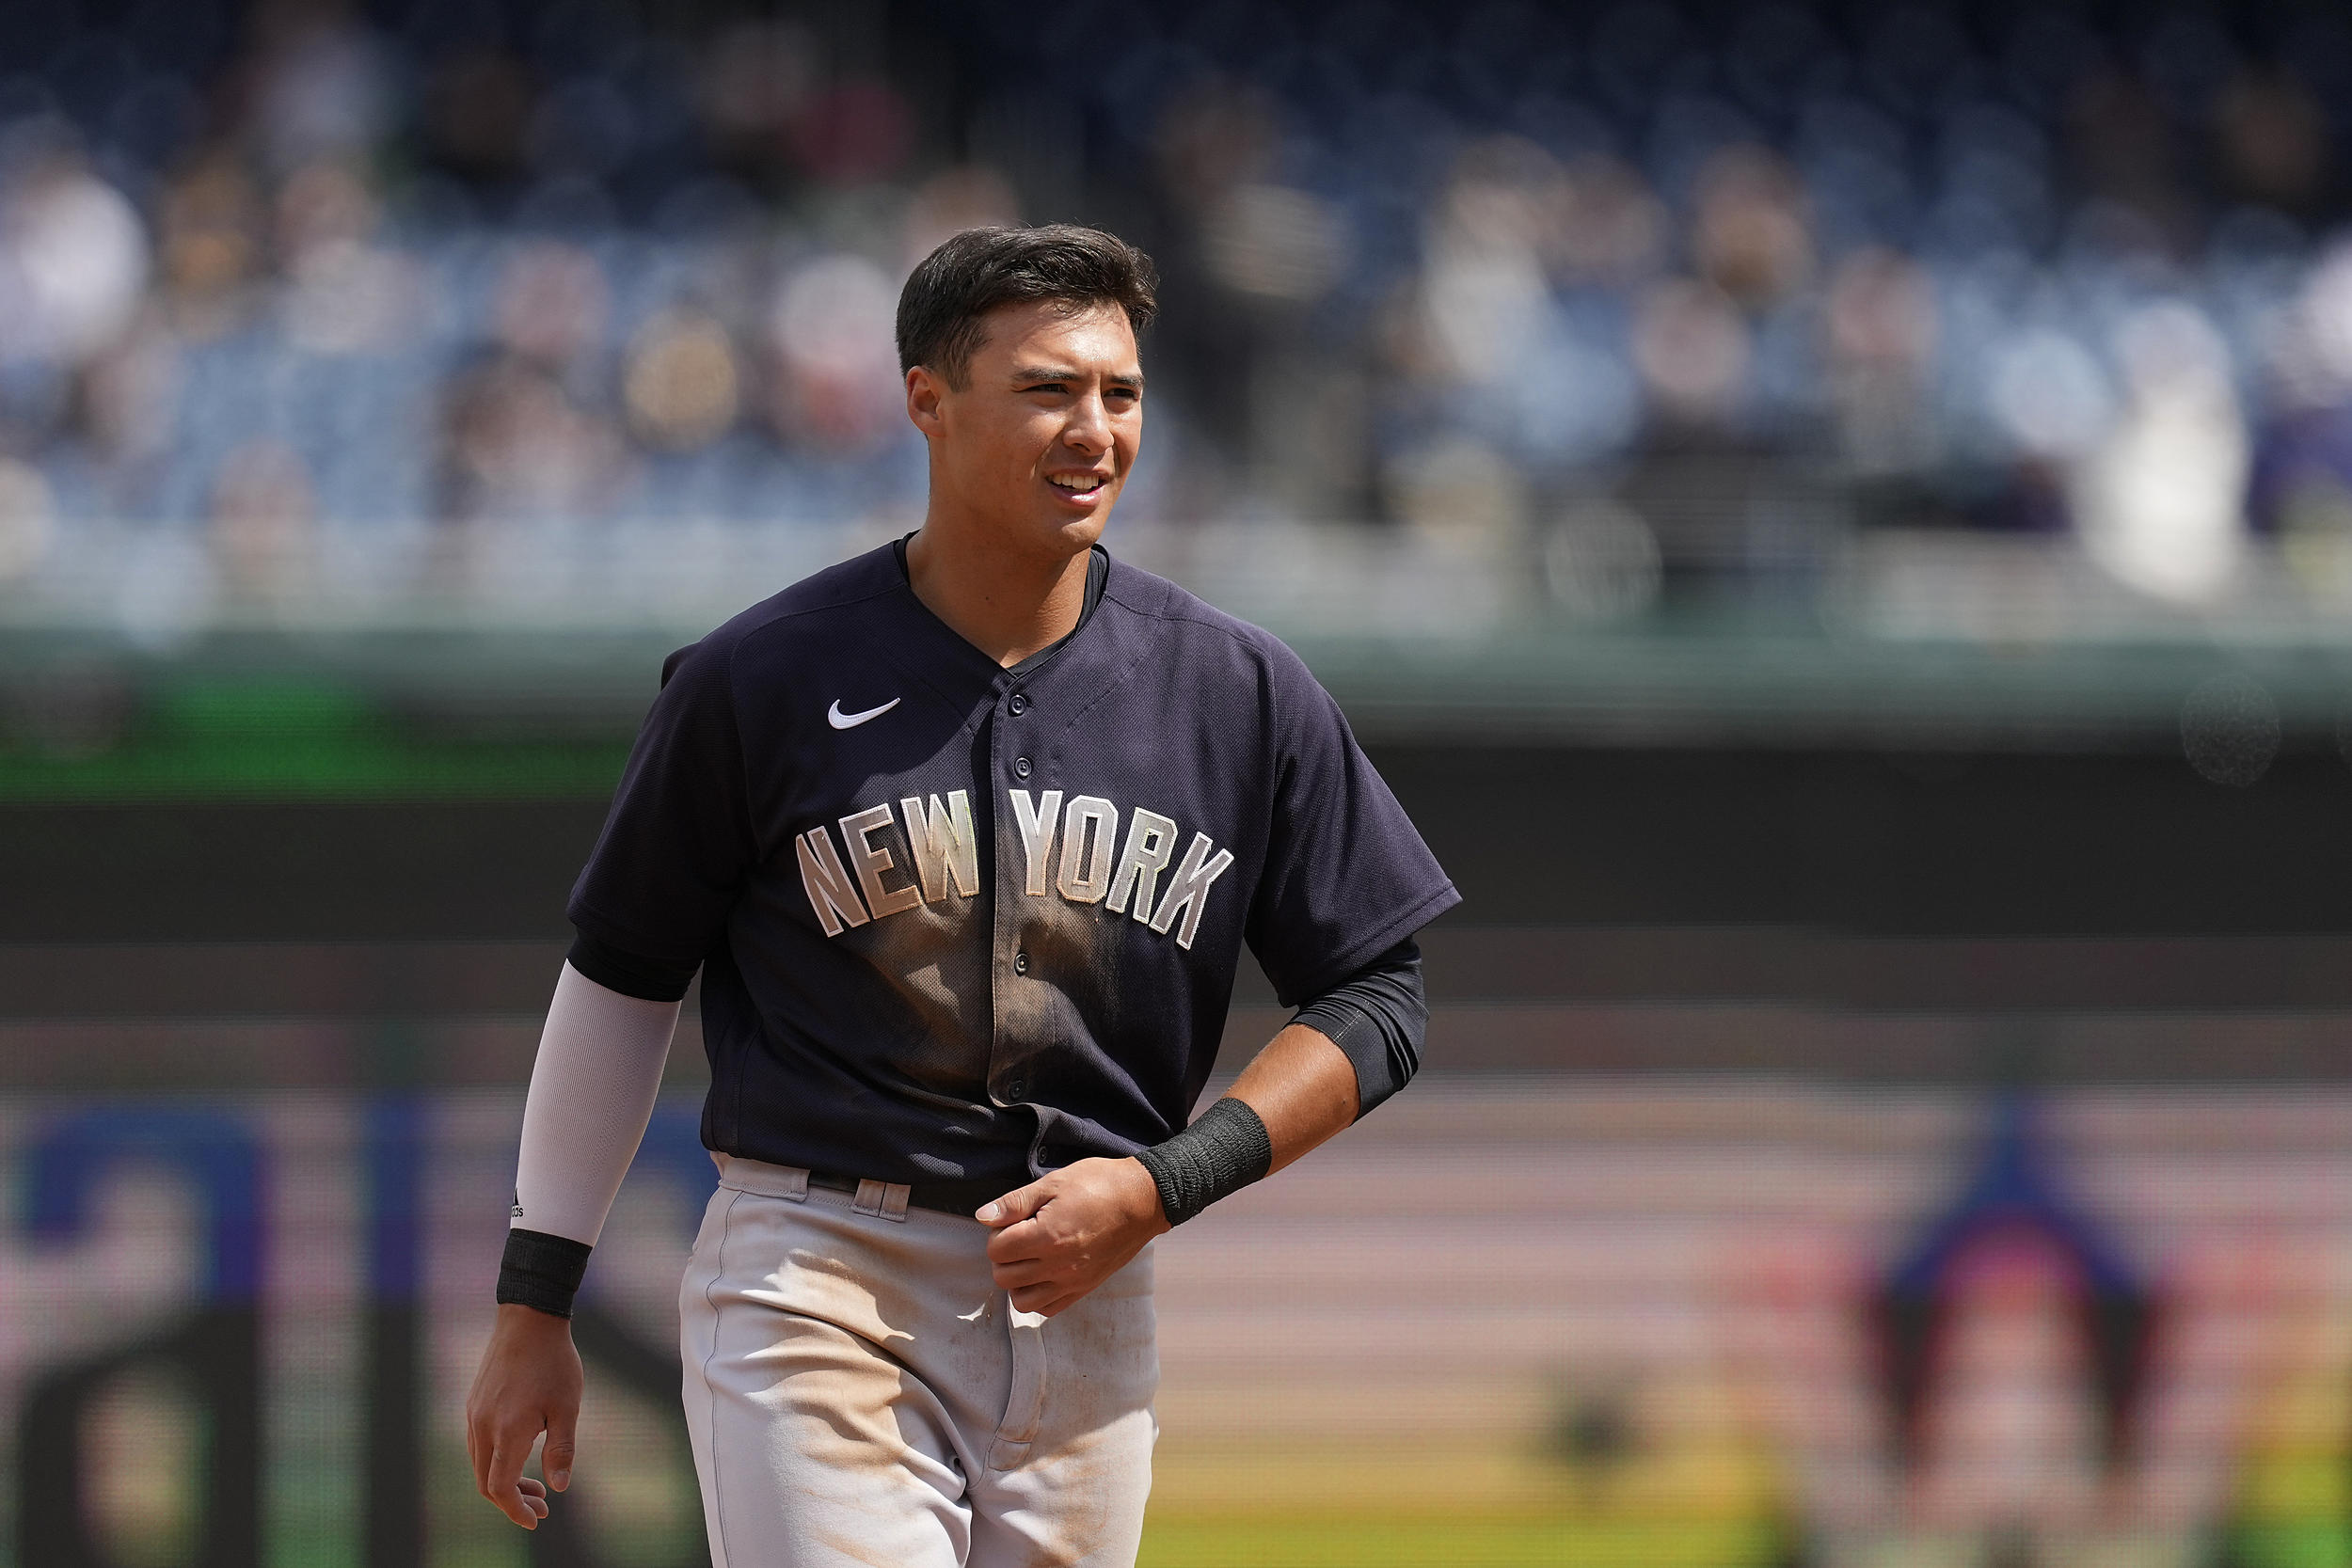 Toms River North's Marinaccio Makes New York Yankees Debut